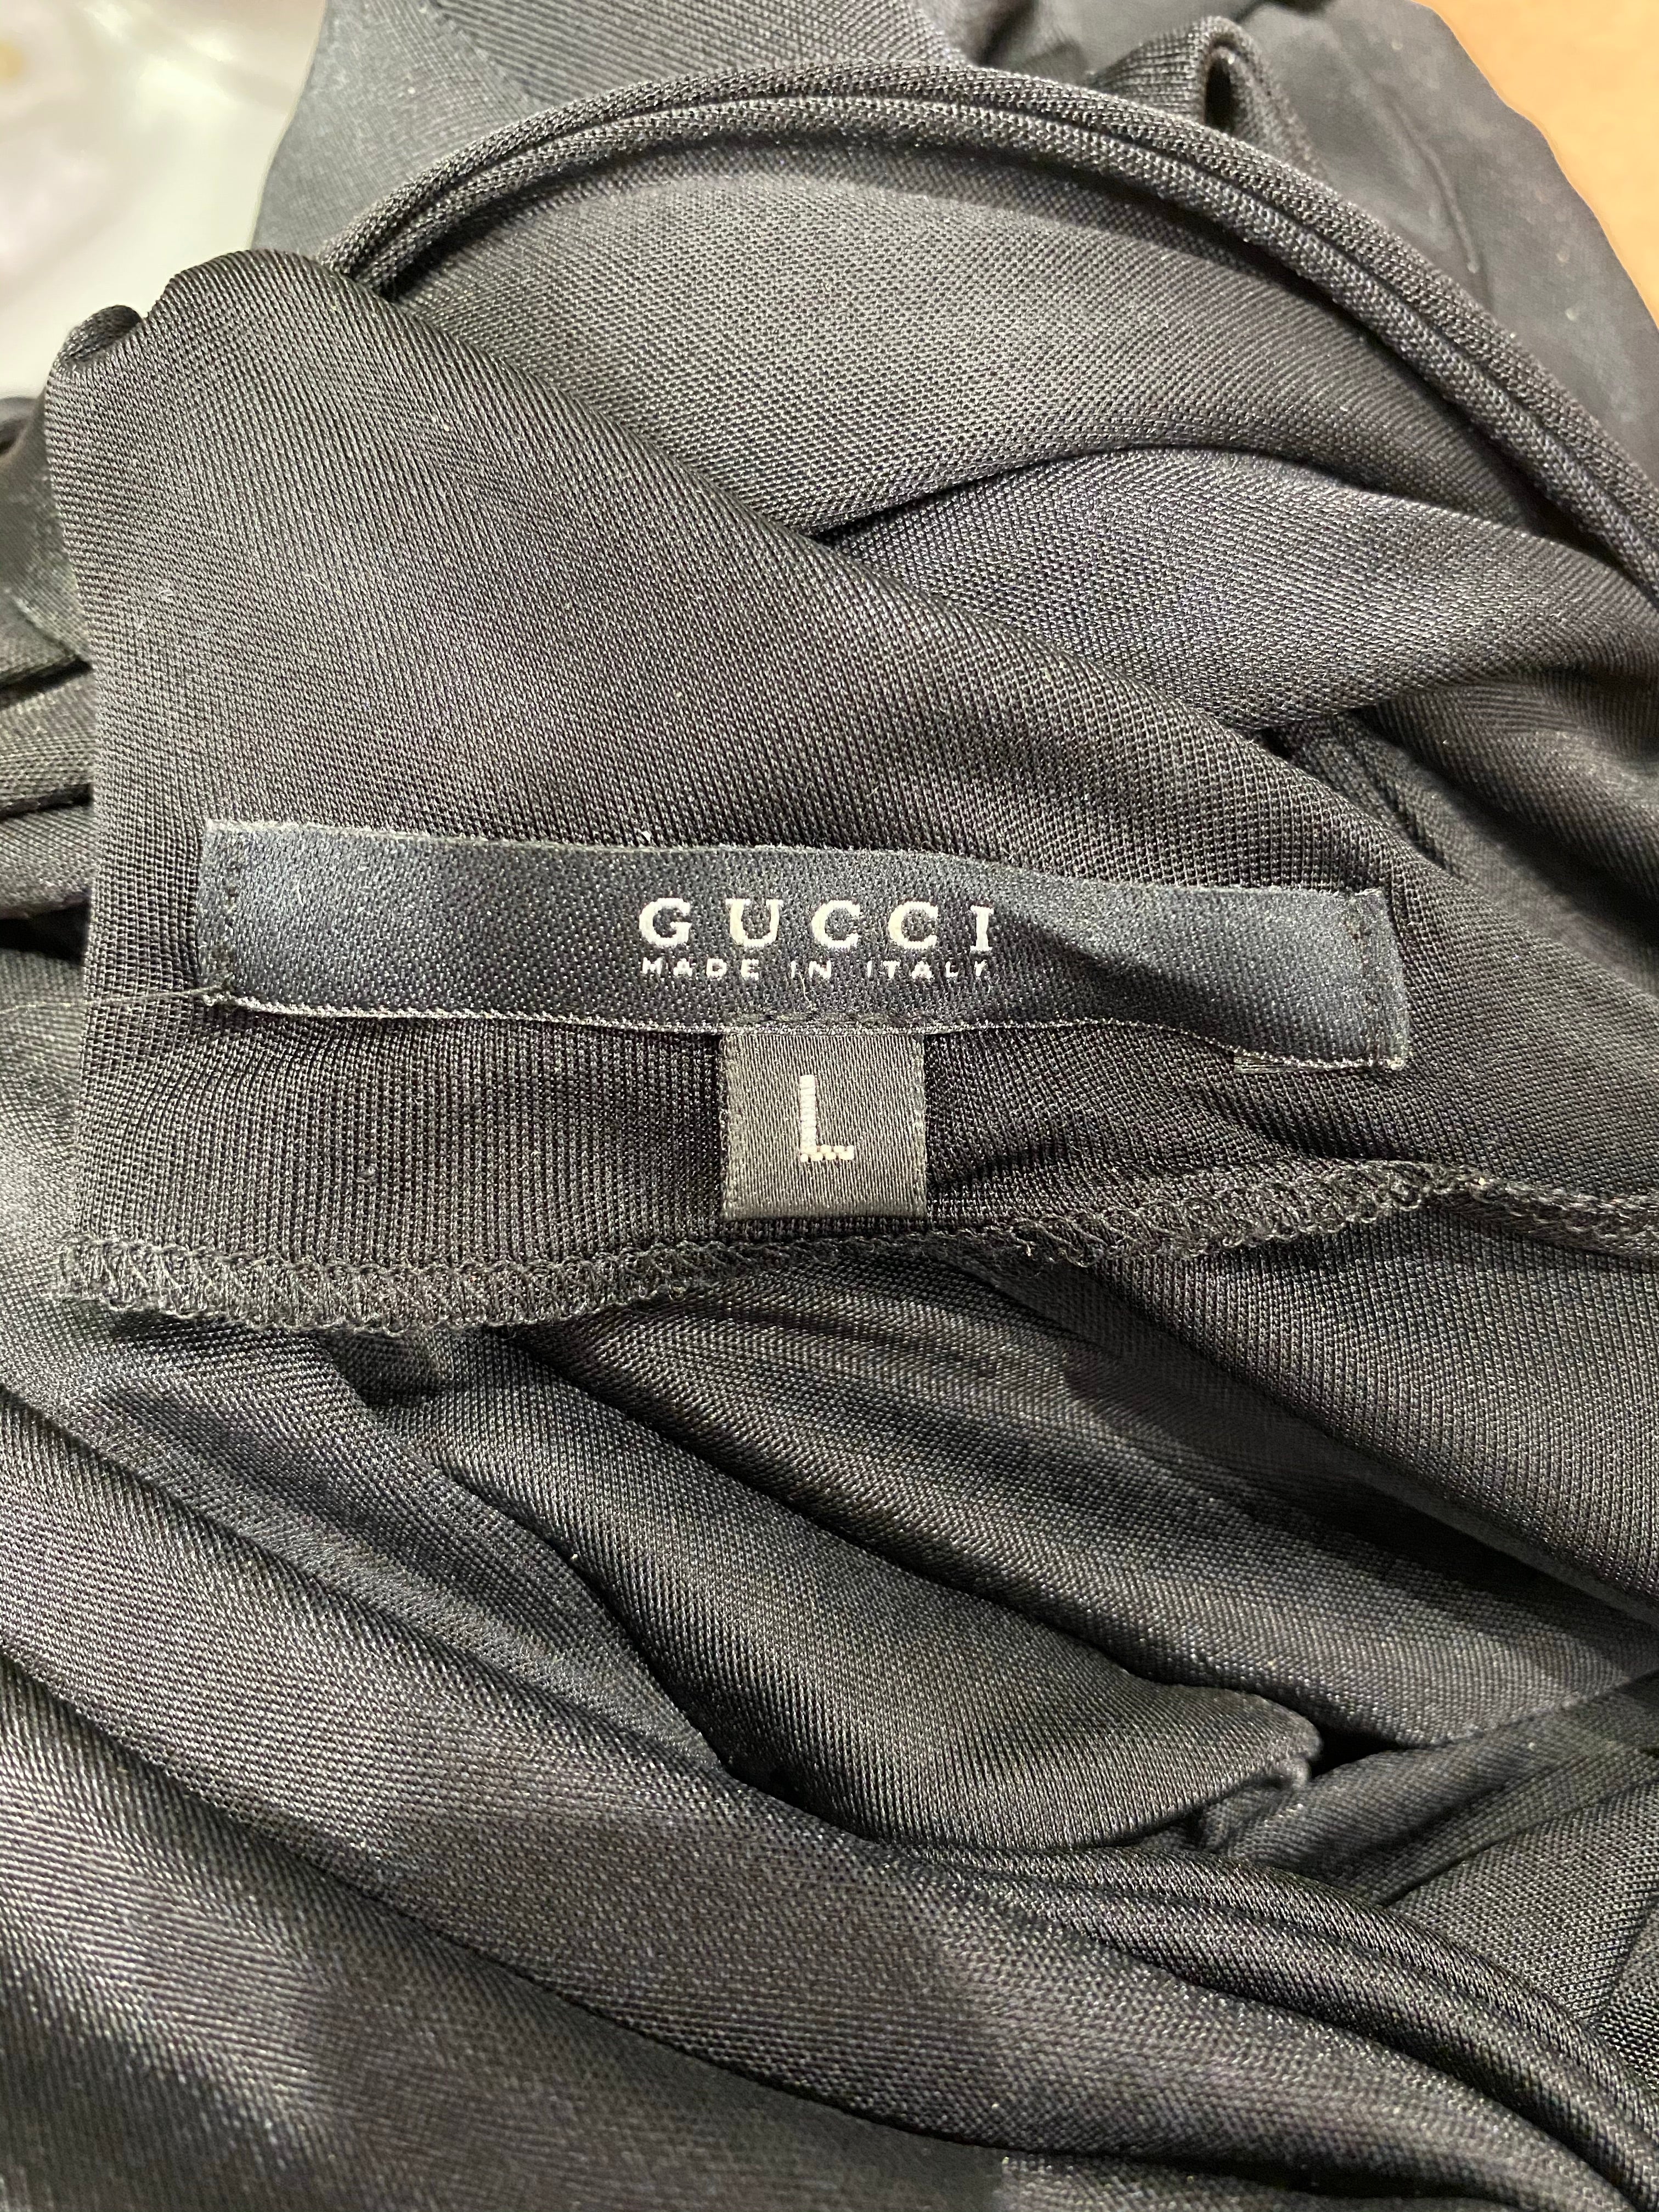 Gucci Black Cut Out Dress